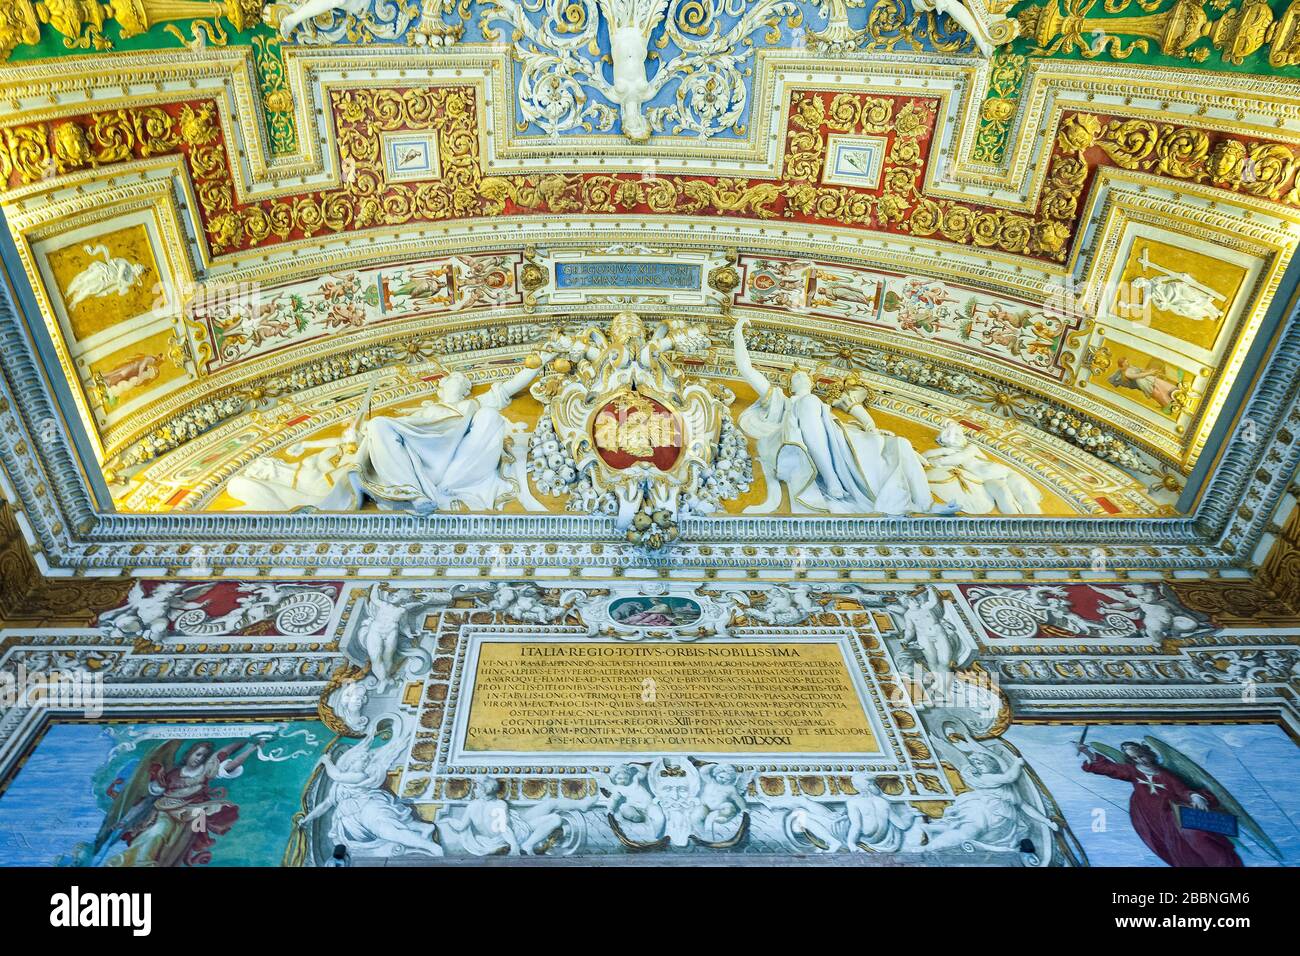 Oktober 2018.Galerie der geographischen Karten im Vatikanischen Museum. Vatikan Stockfoto